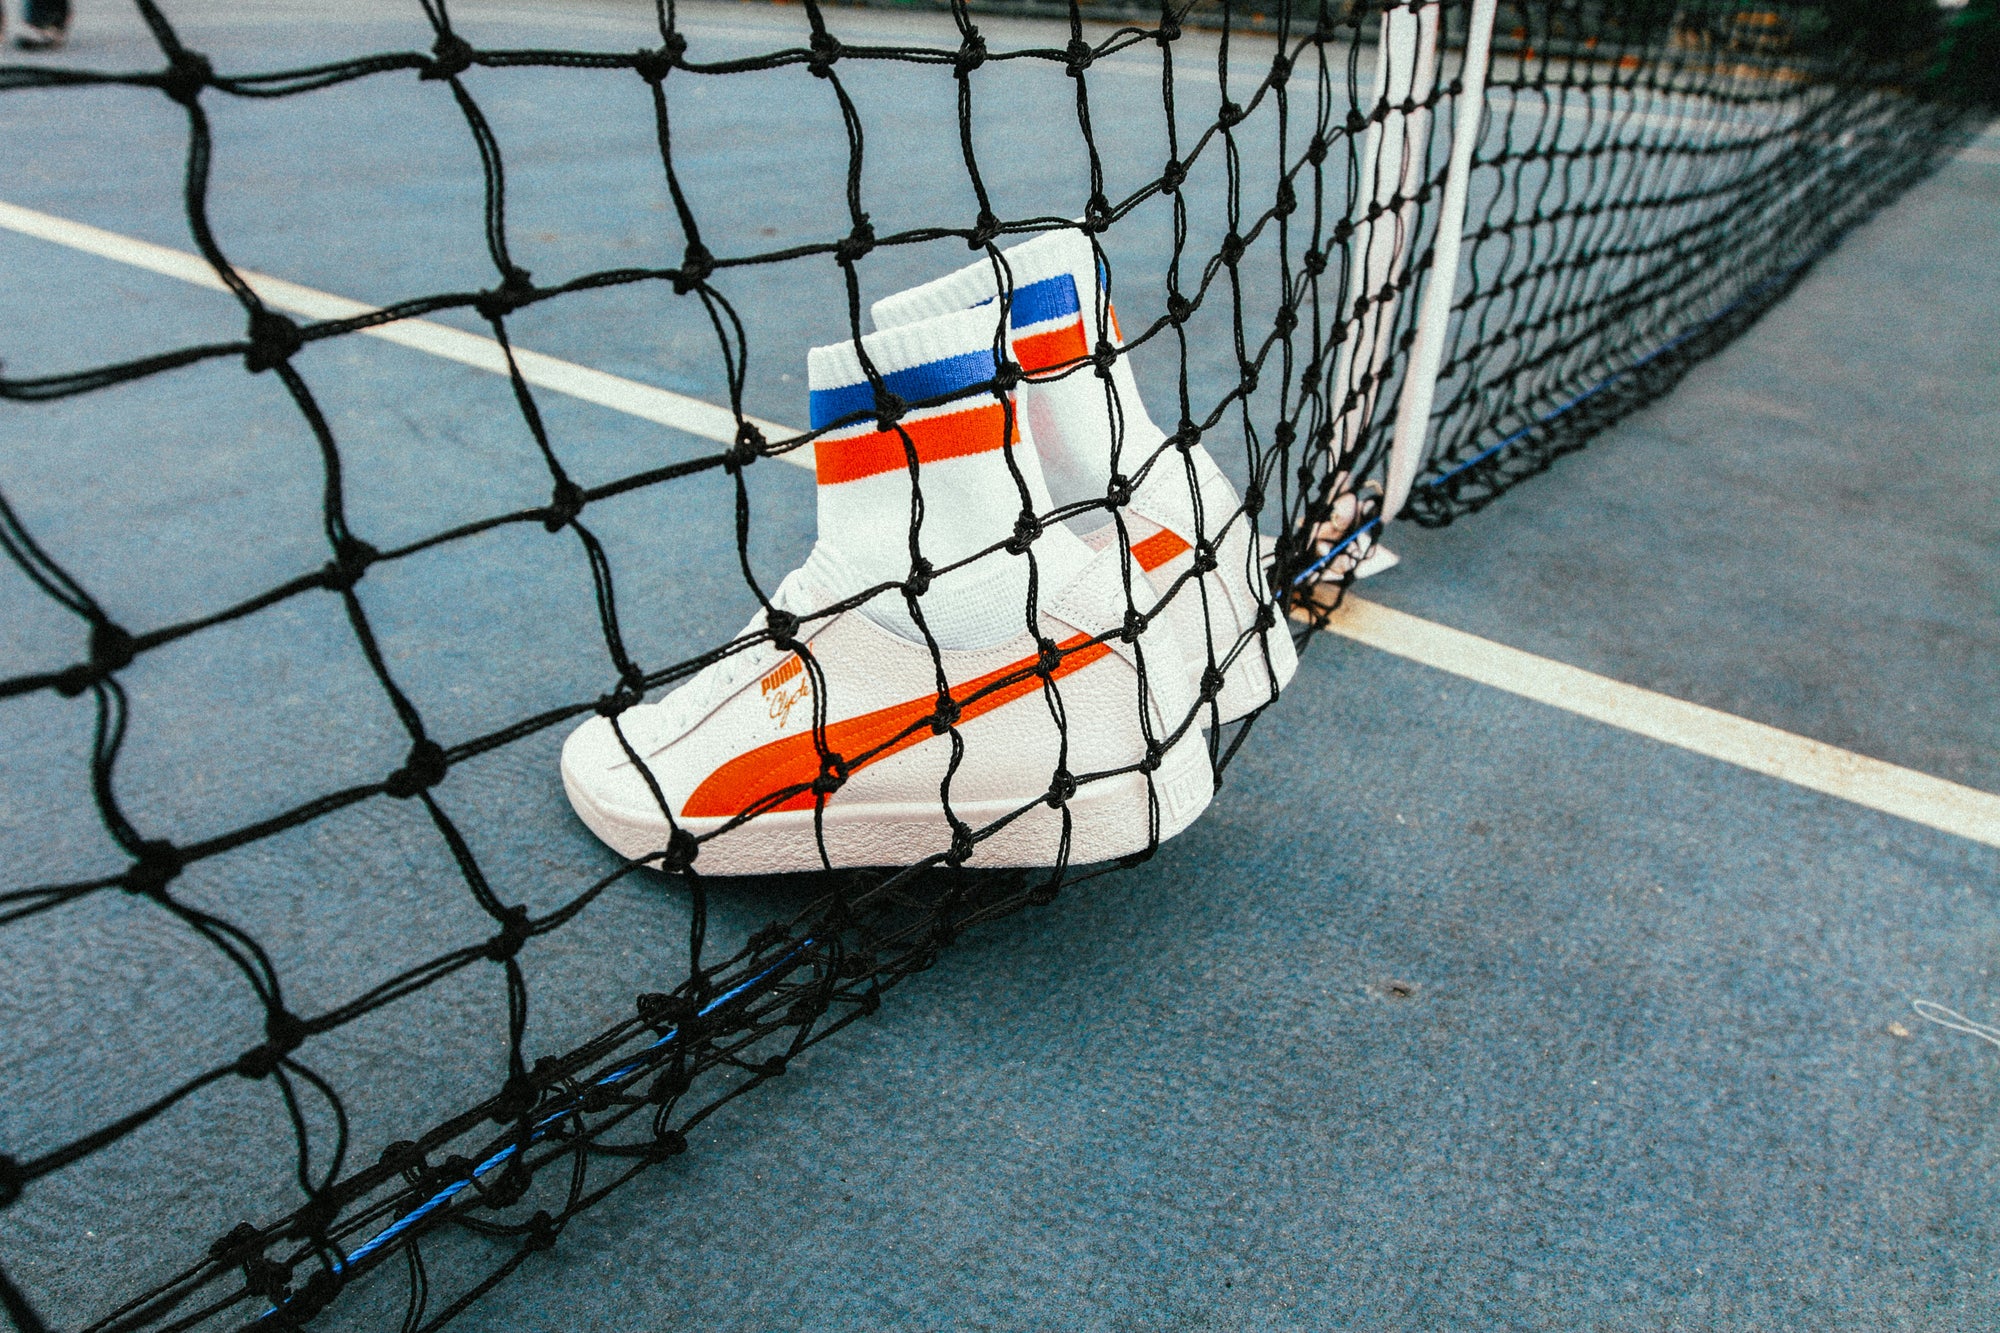 White and Orange puma shoes on a tennis net